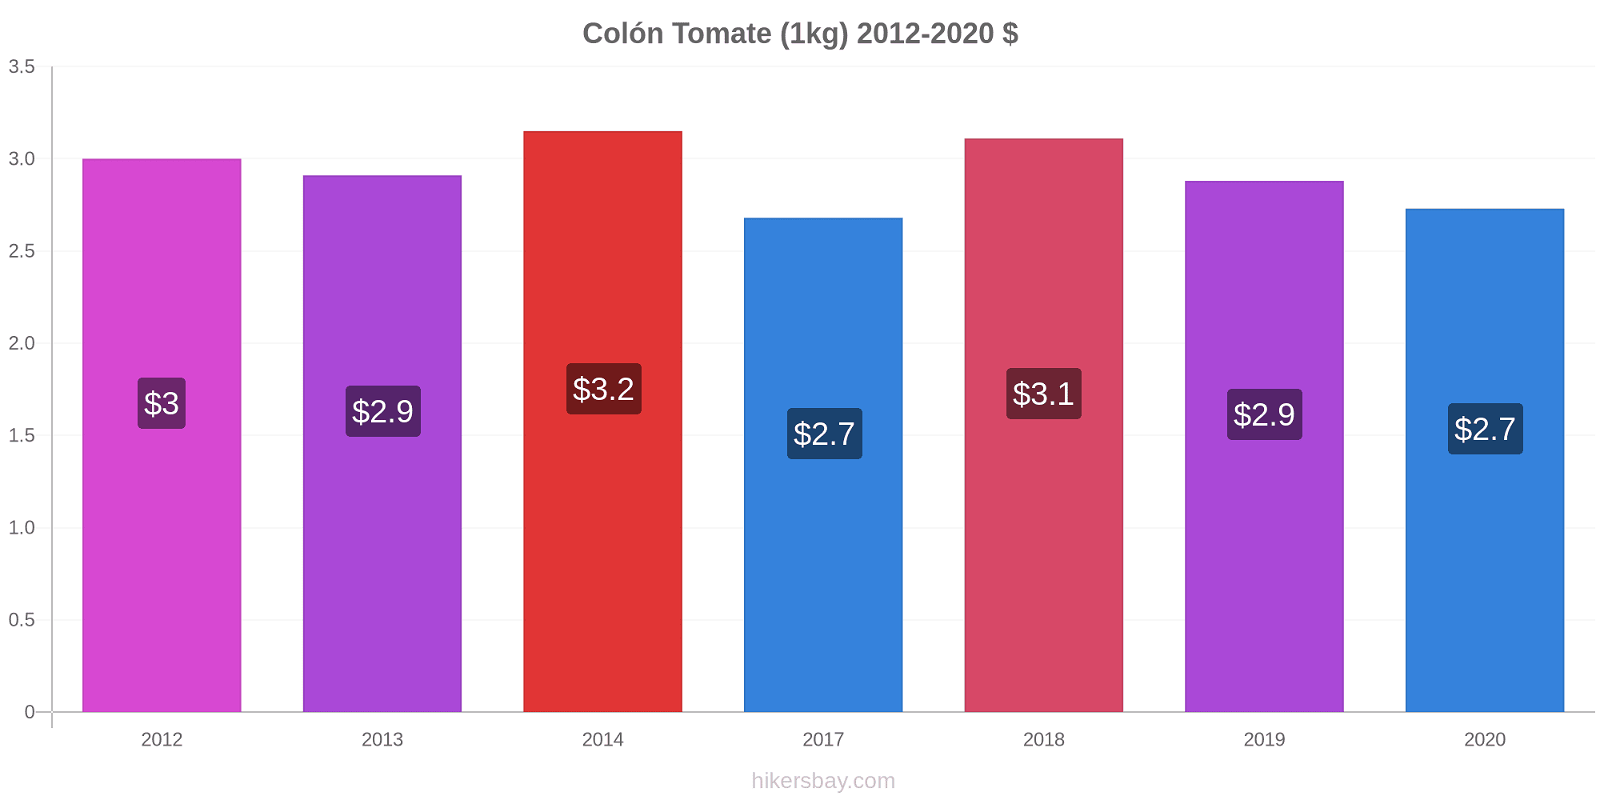 Colón changements de prix Tomate (1kg) hikersbay.com